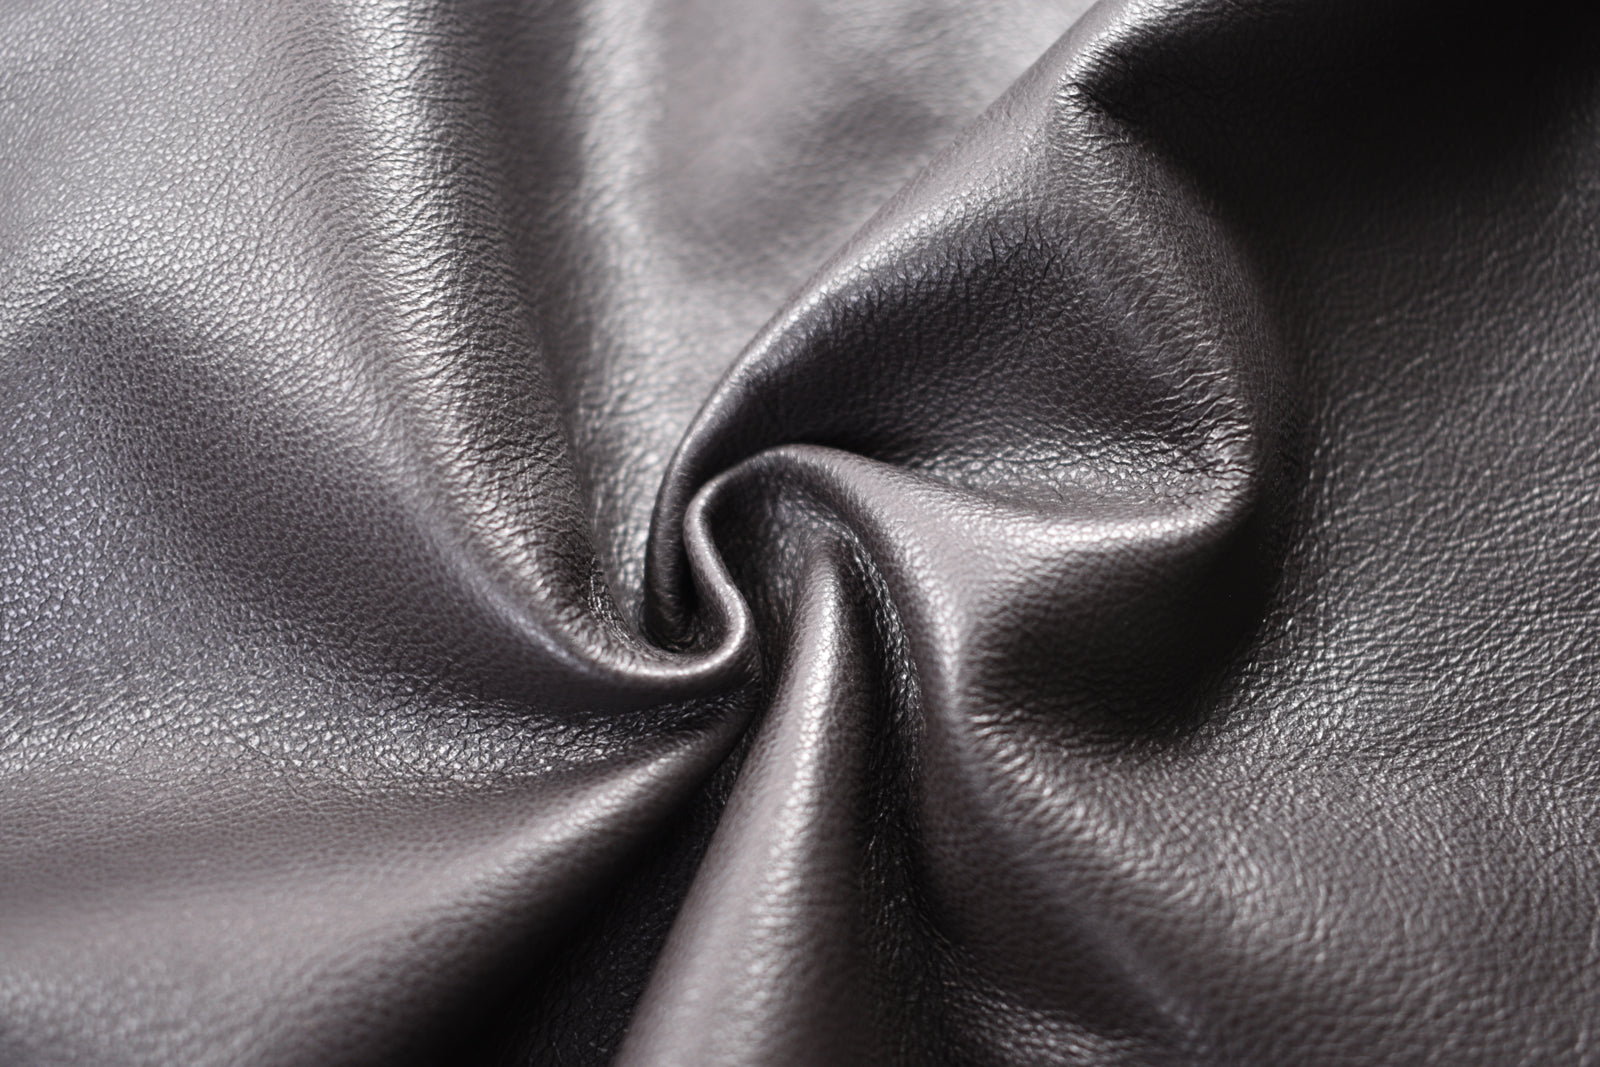 Sheep Nappa Leather 6 - 17 sq ft - Garment Quality